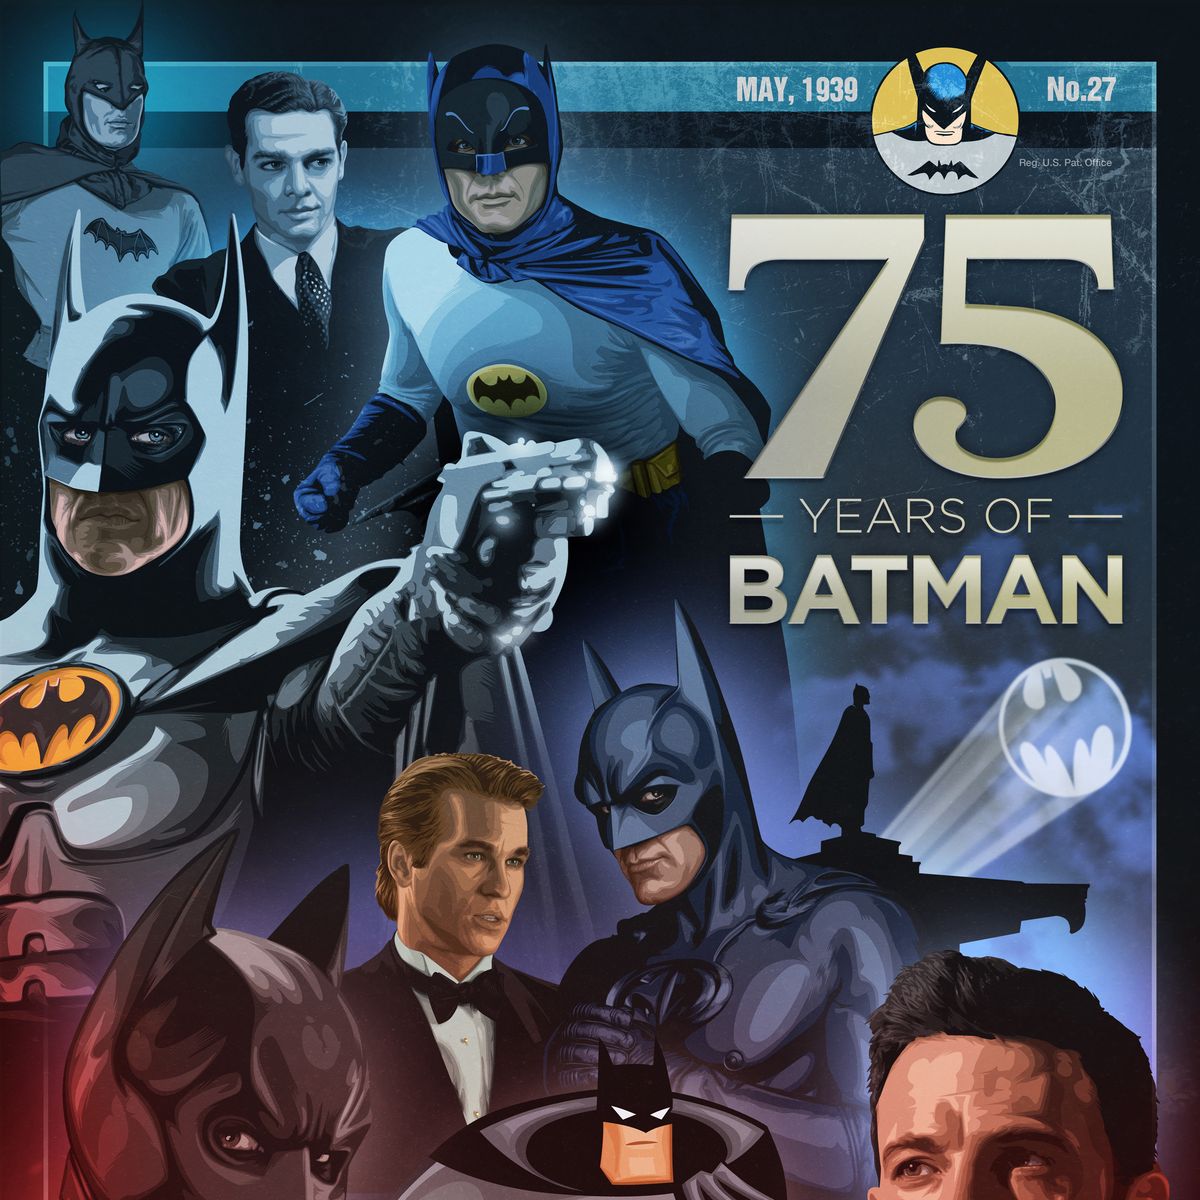 Batman turns 75: The men behind the mask